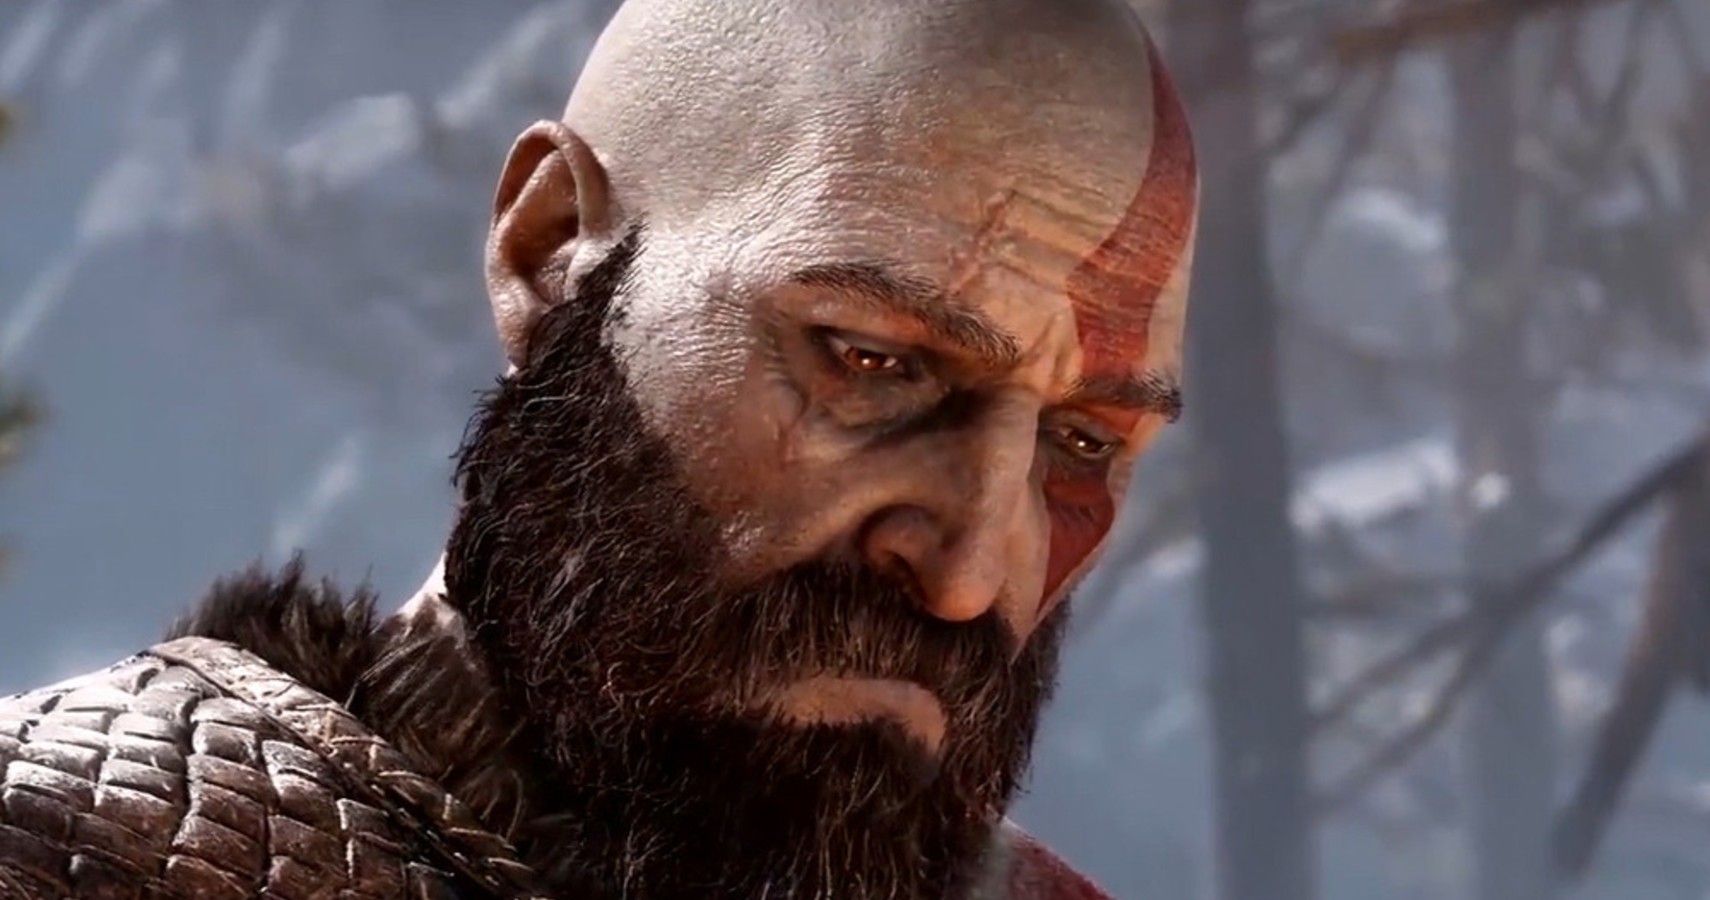 kratos from god of war